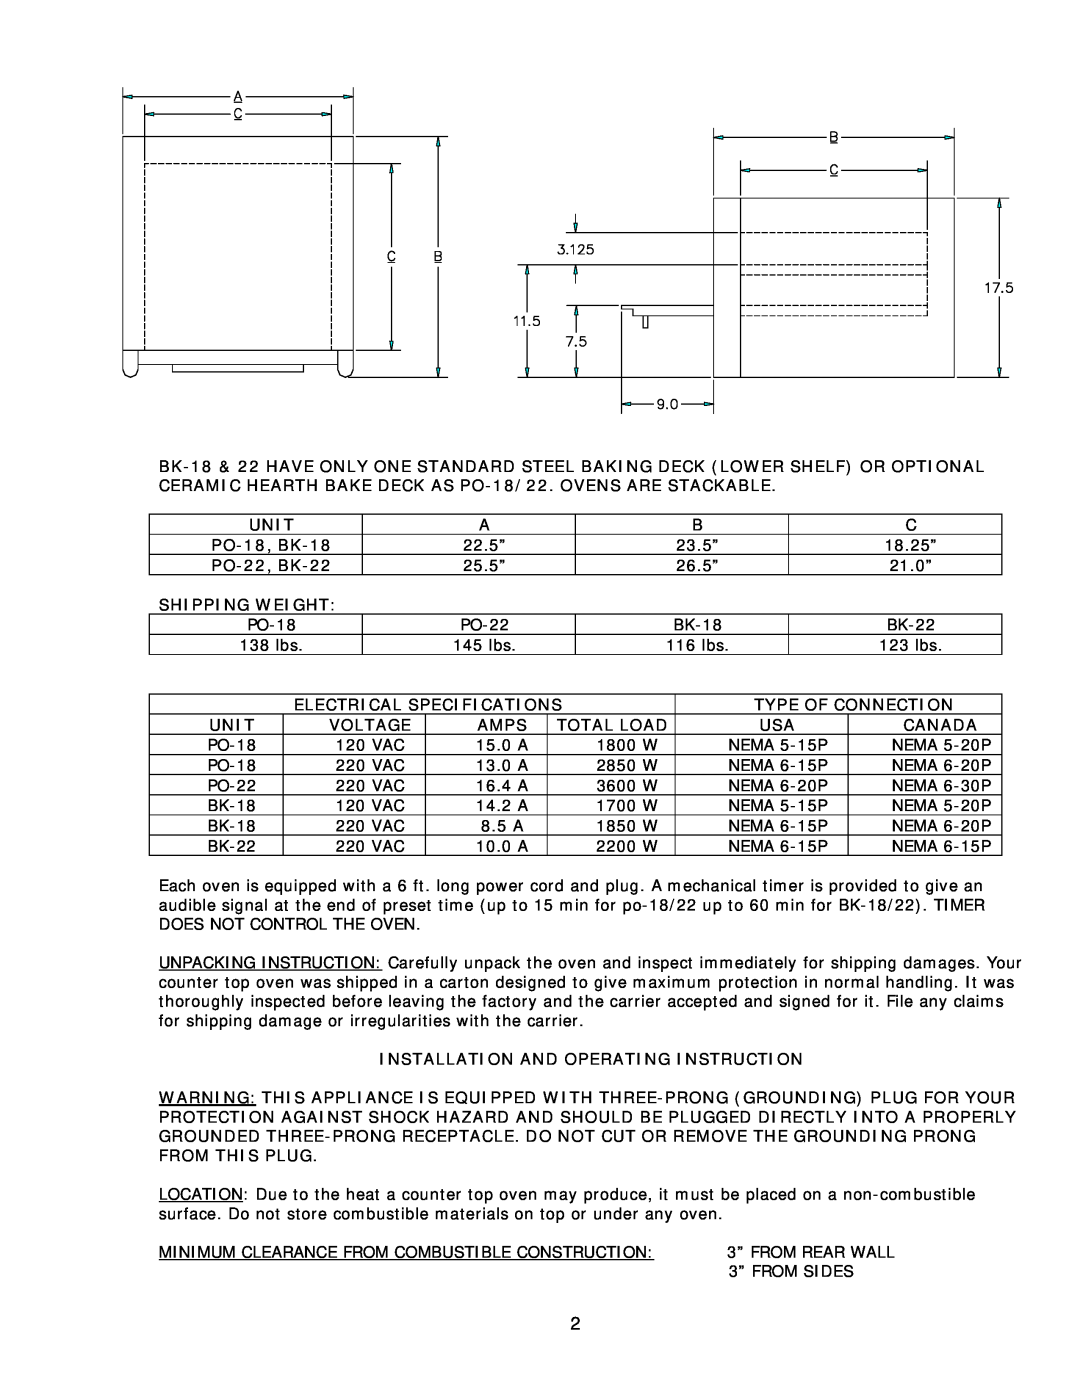 Cecilware operation manual PO-18, BK-18, PO-22, BK-22, Voltage 